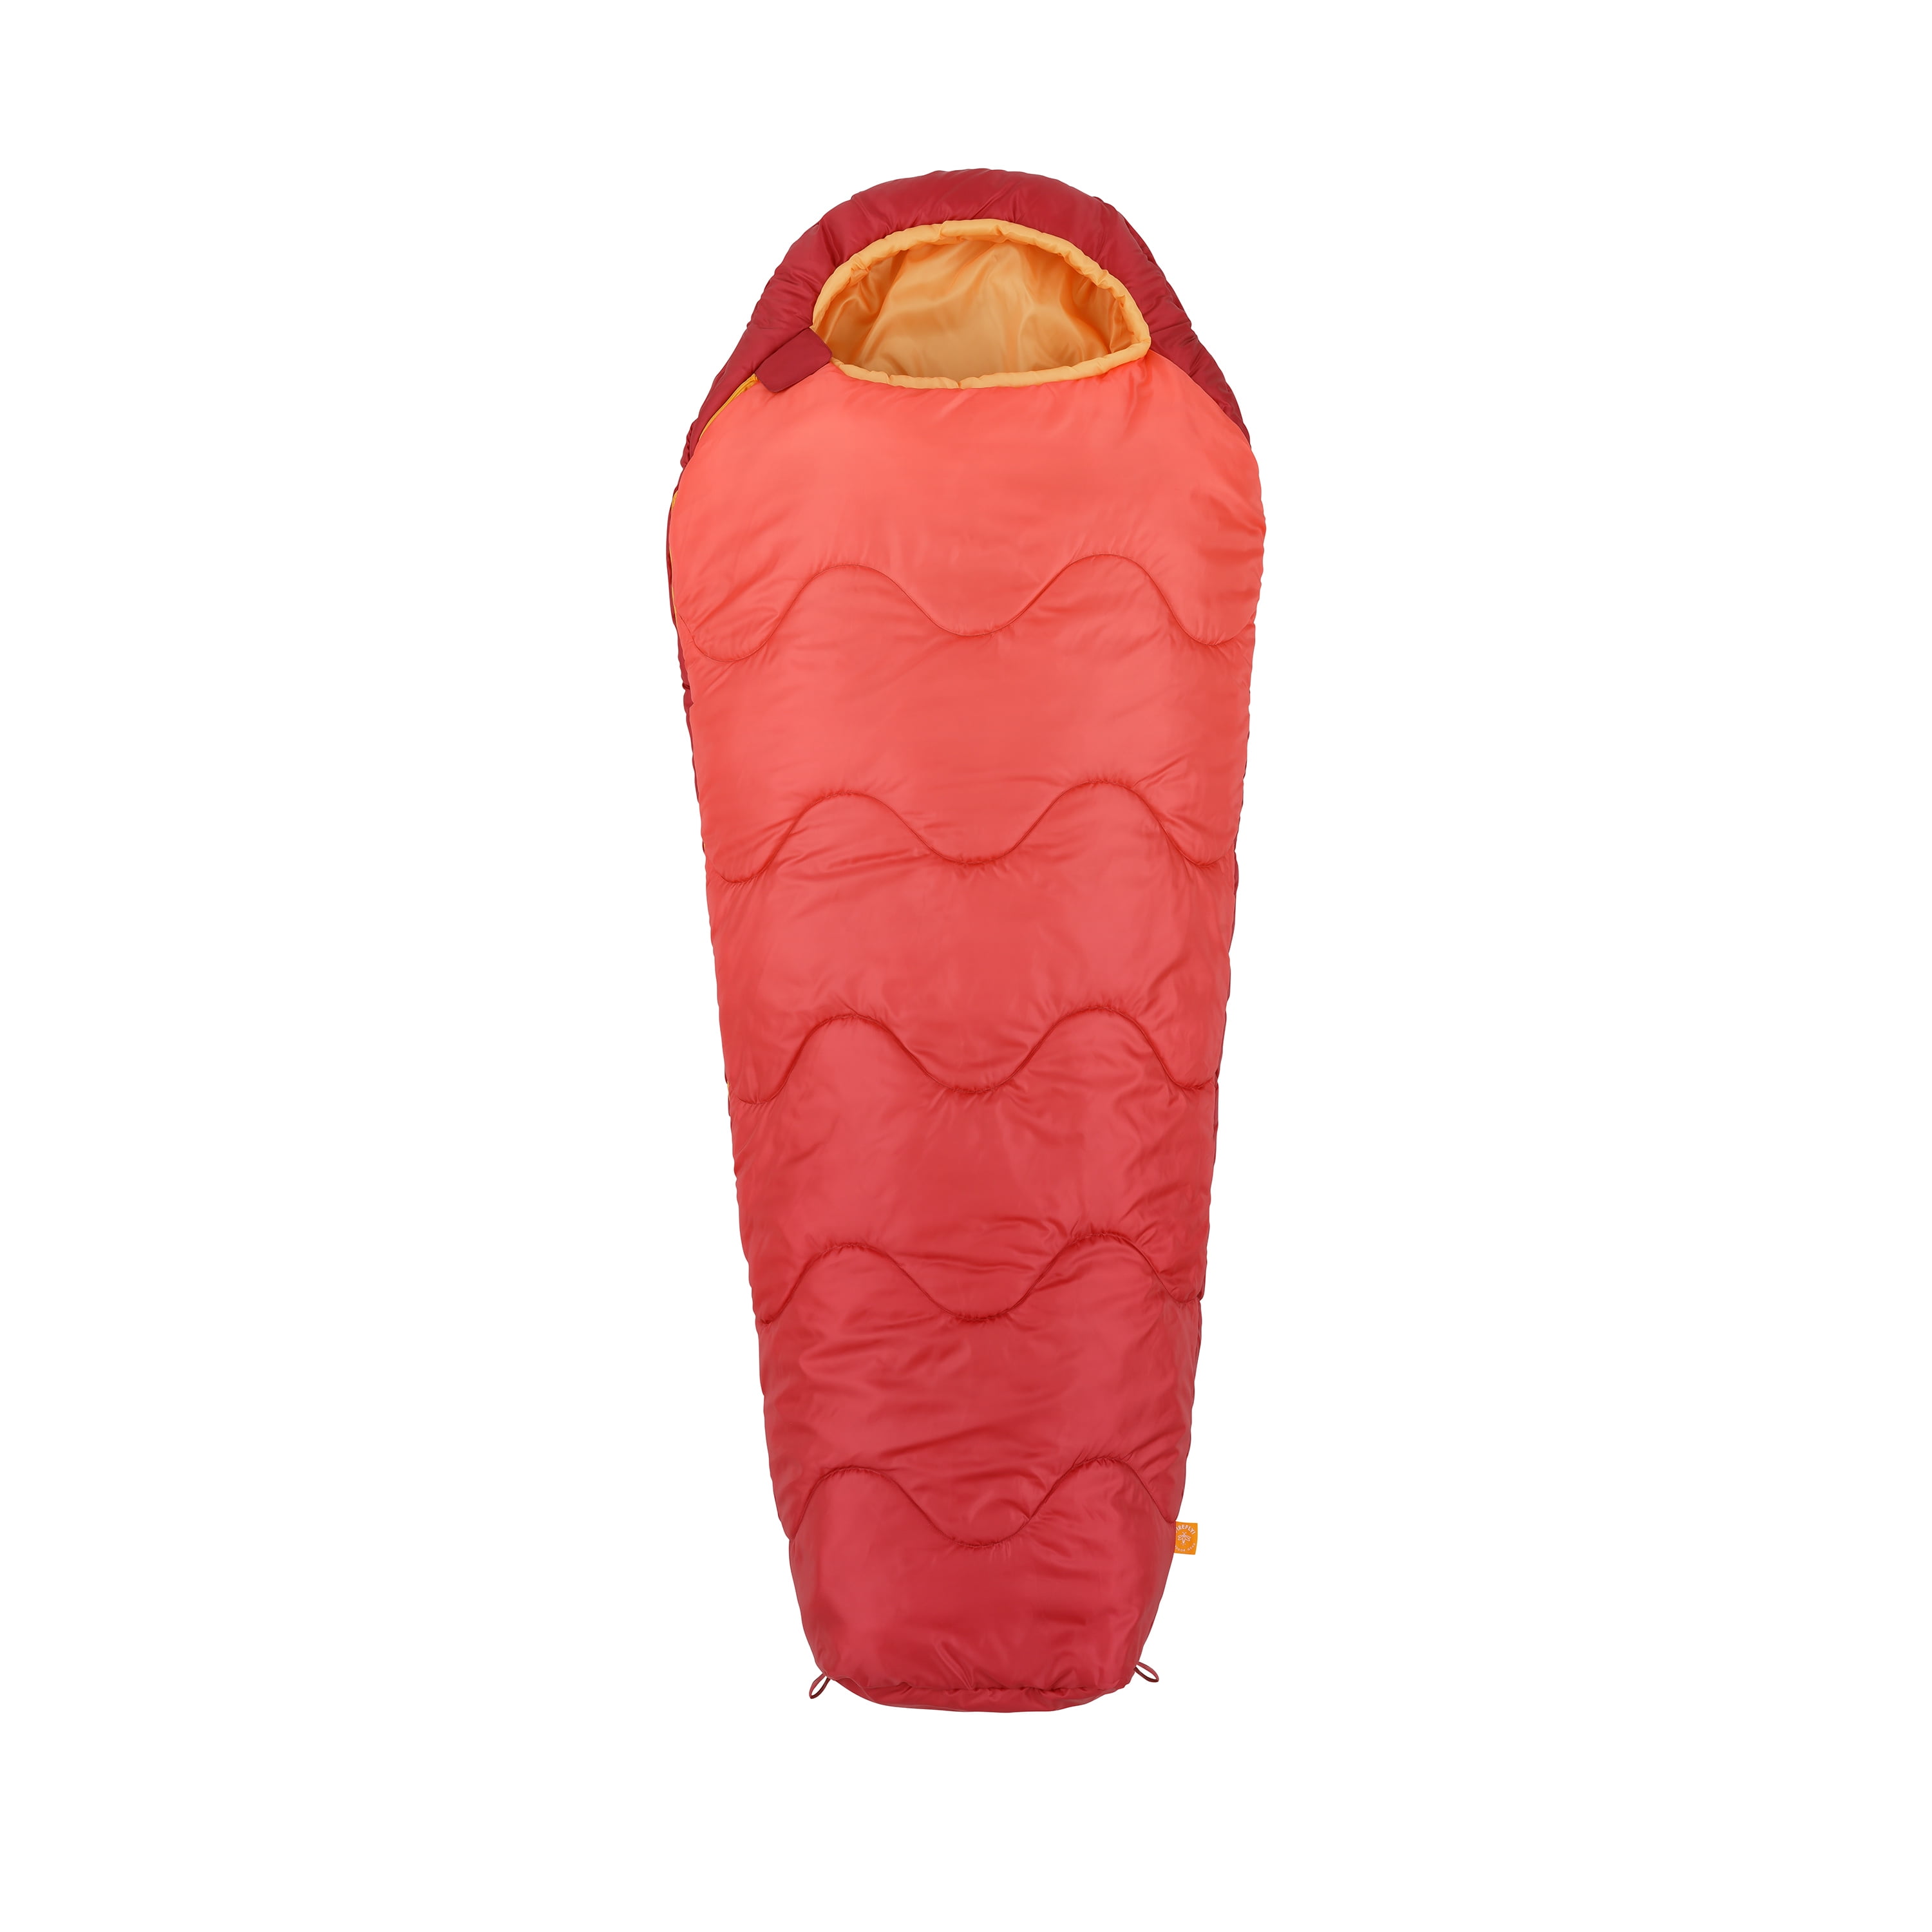 Firefly! Outdoor Gear Kid's Mummy Sleeping Bag – Red/Orange (youth size 70  in. x 30 in.)